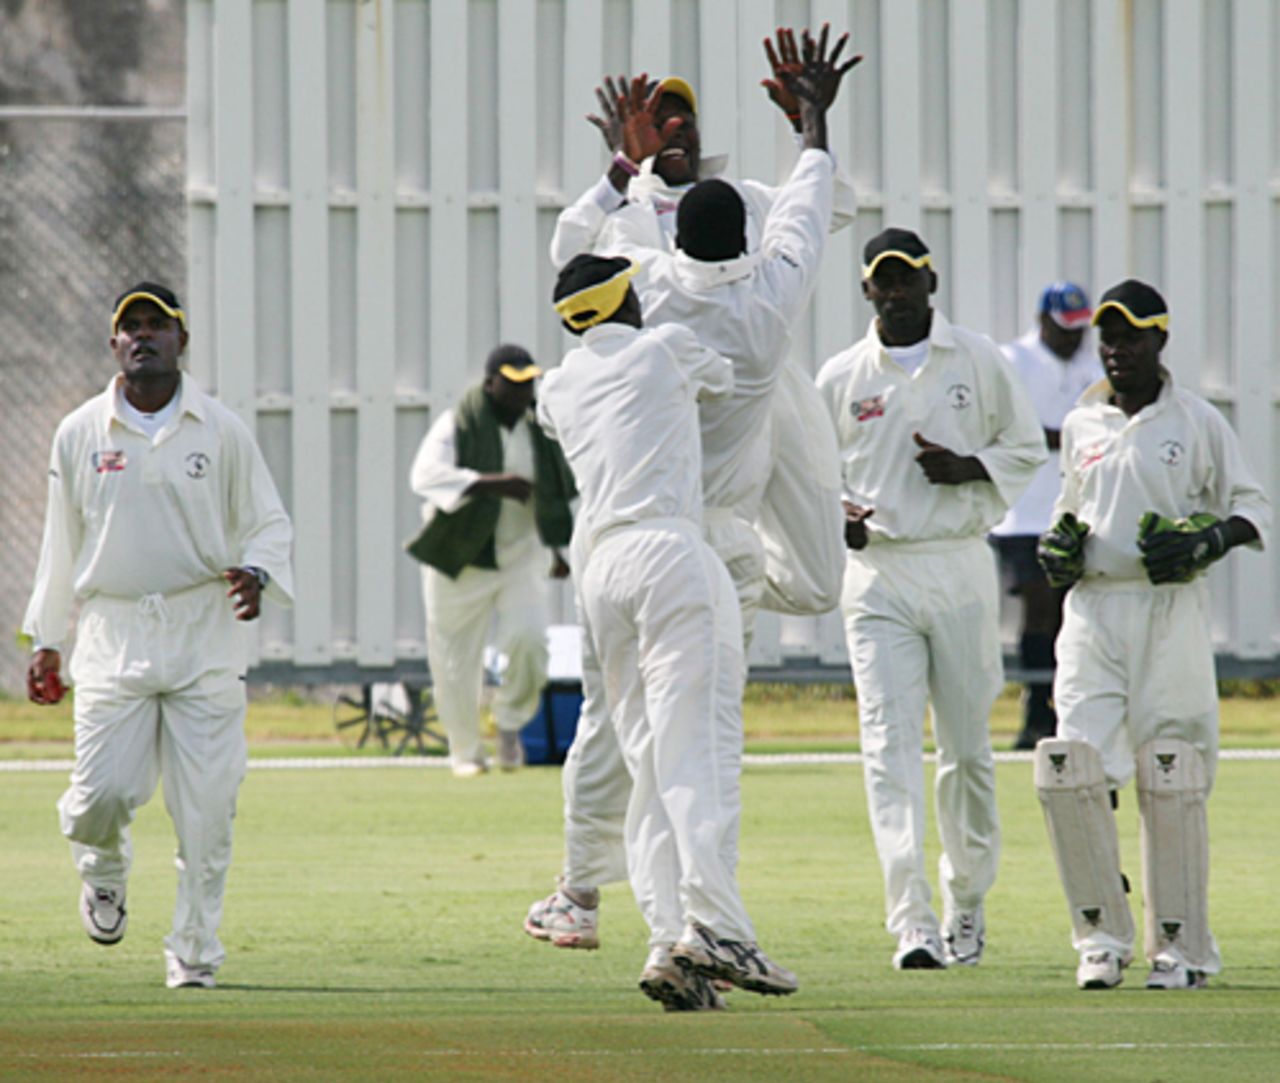 The Uganda players celebrate the fall of another Bermudan wicket, Bermuda v Uganda, ICC Intercontinental Shield, 1st day, Hamilton, August 17, 2009  